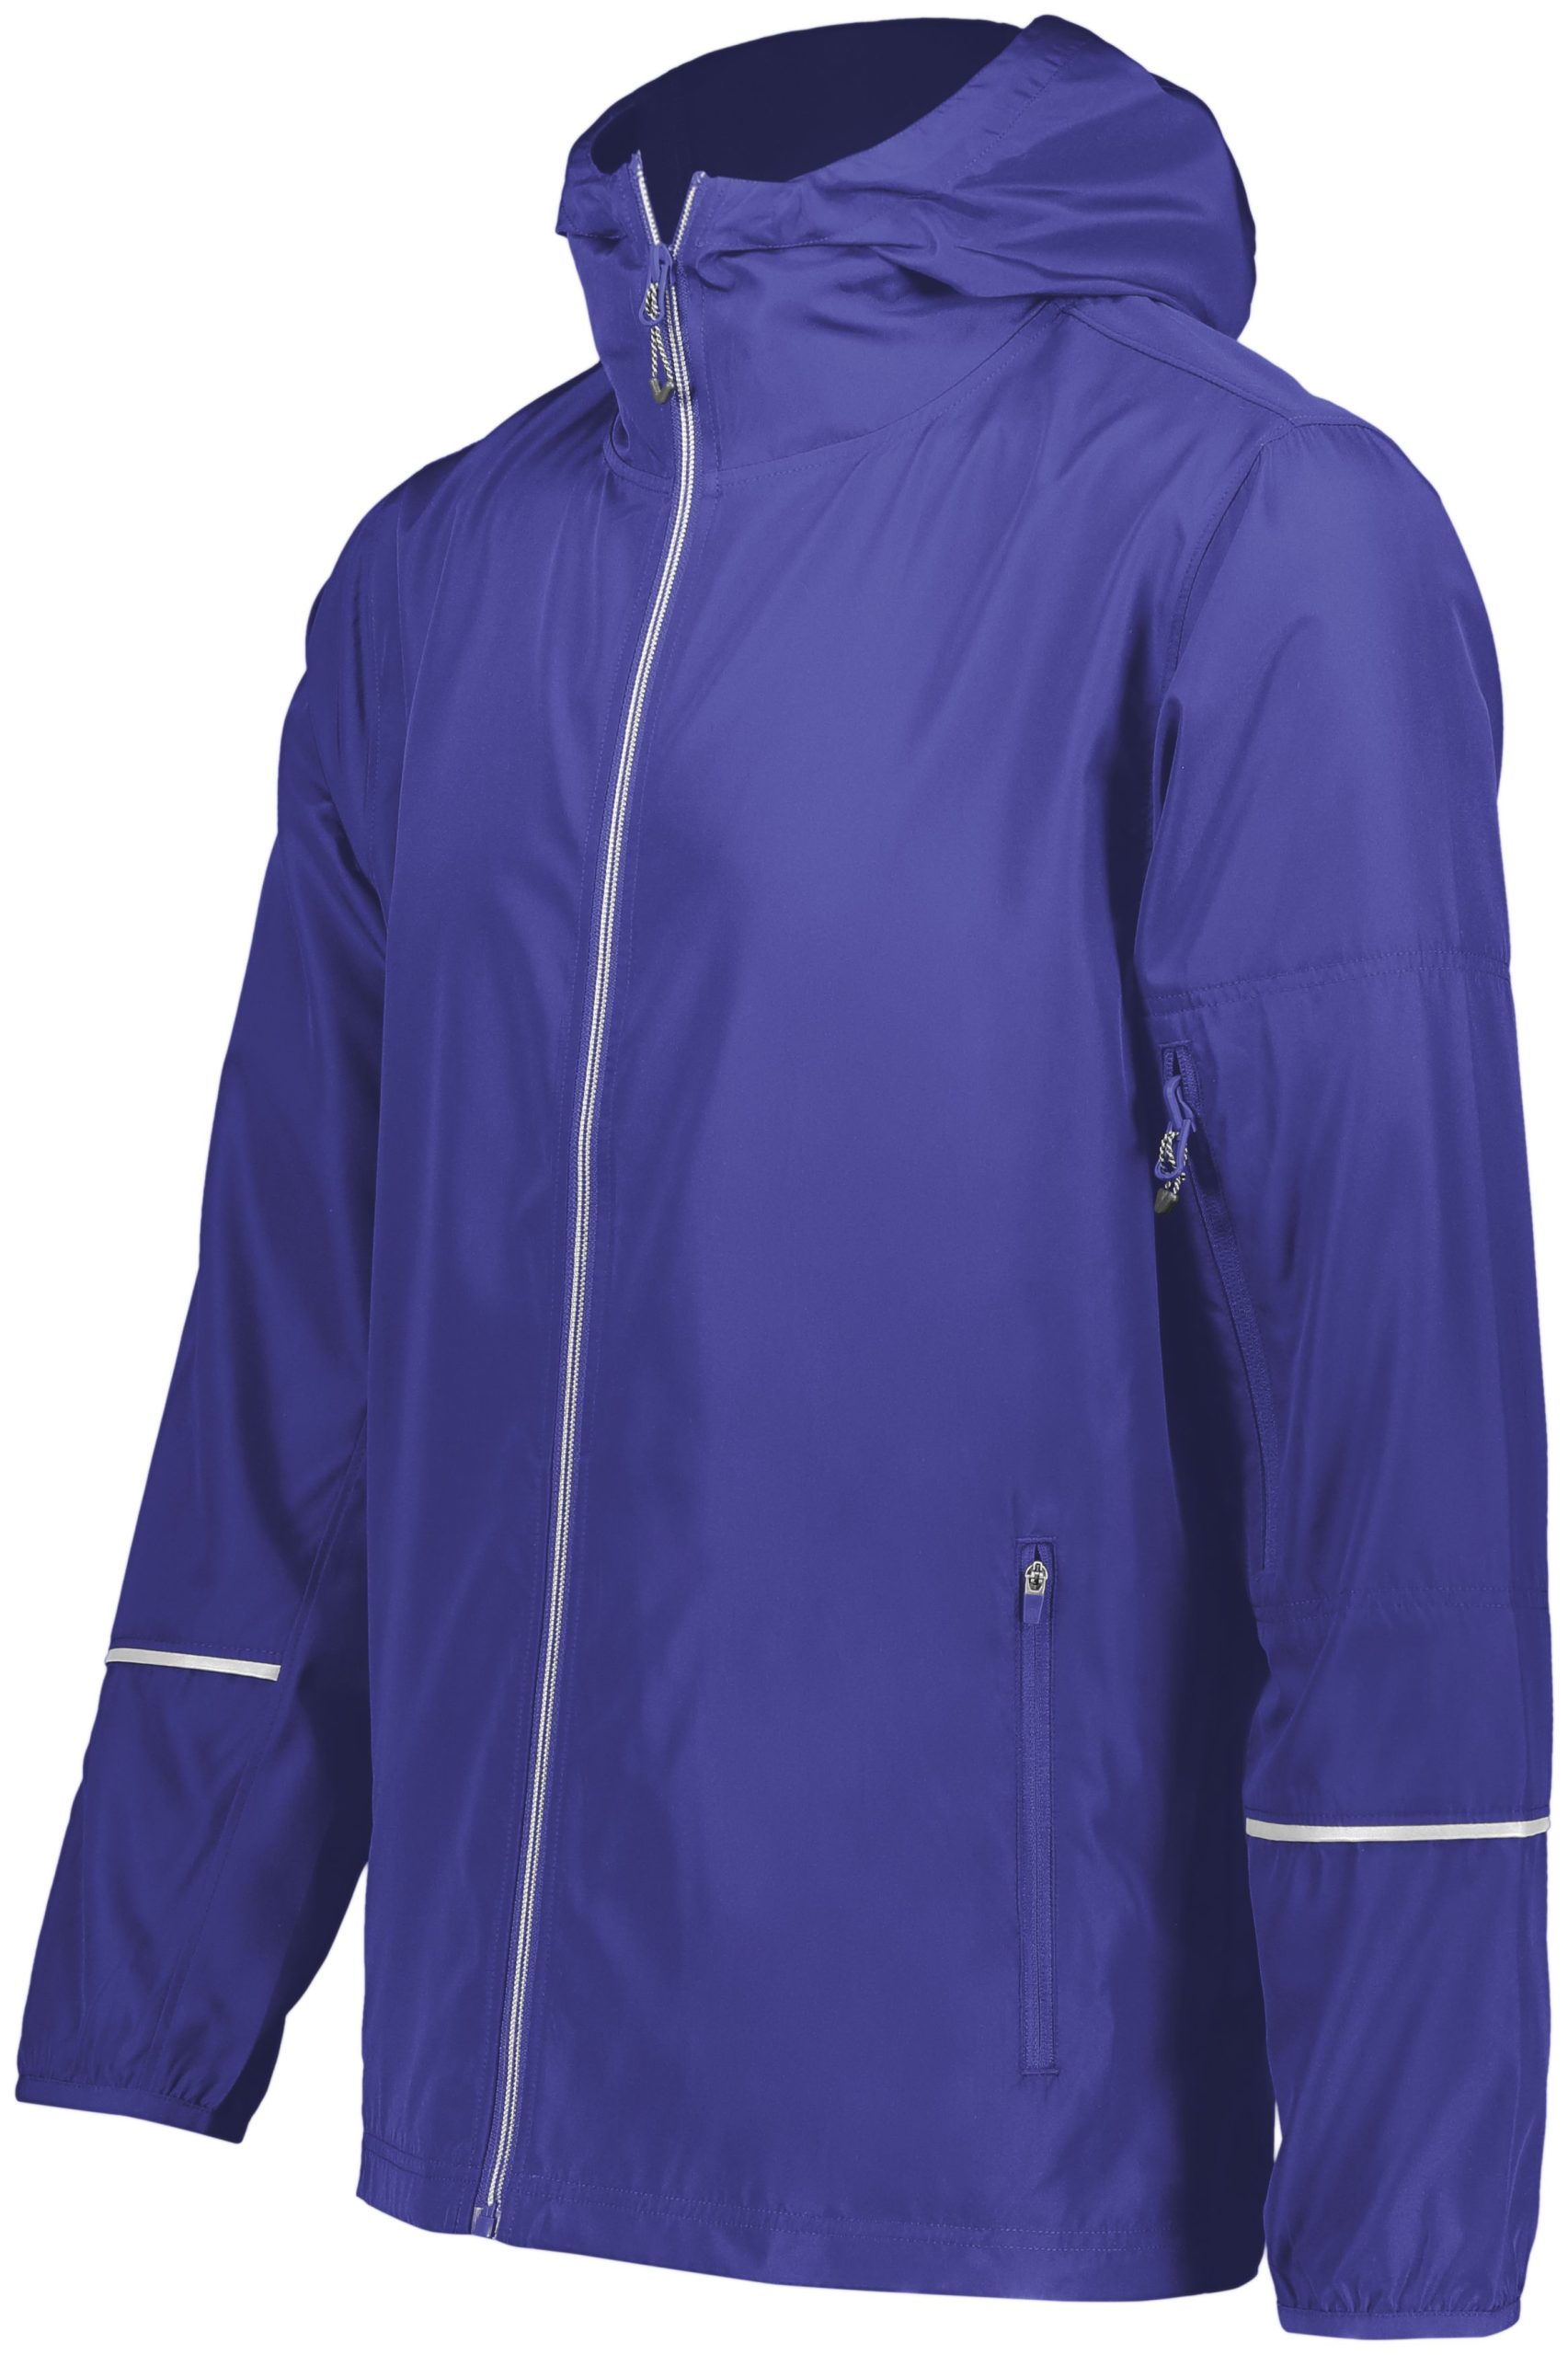 holloway-wind-water-resistant-packable-full-zip-jacket-purple-hlw